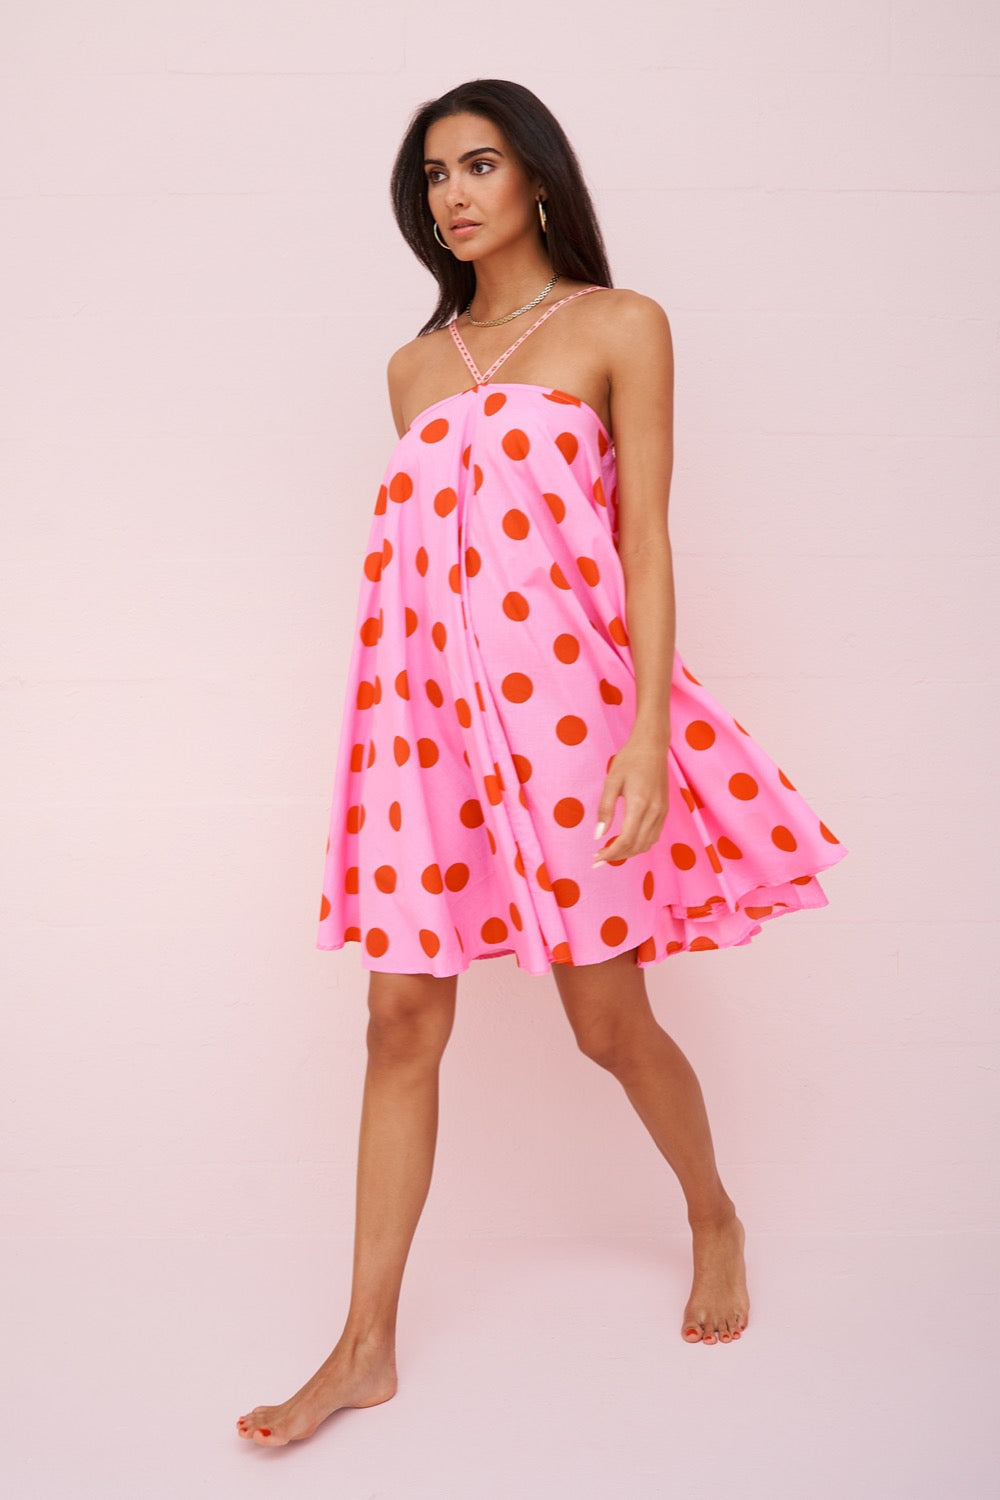 Hot Pink Maxi Dress - Polka Dot Dress - Cutout Maxi Dress - Lulus